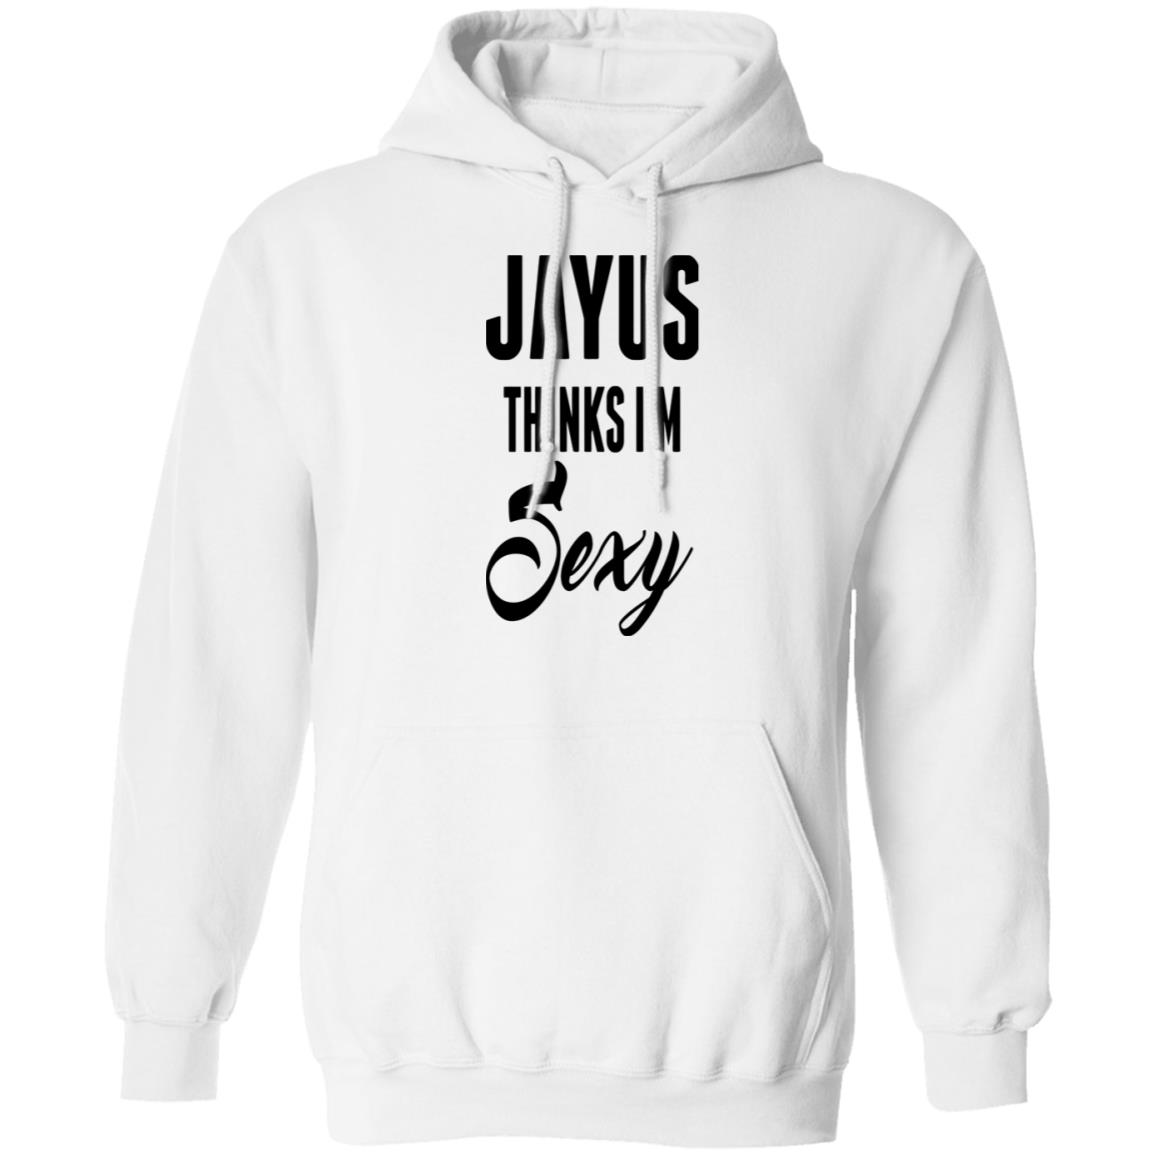 Jayus Thinks I’m Sexy Shirt 2